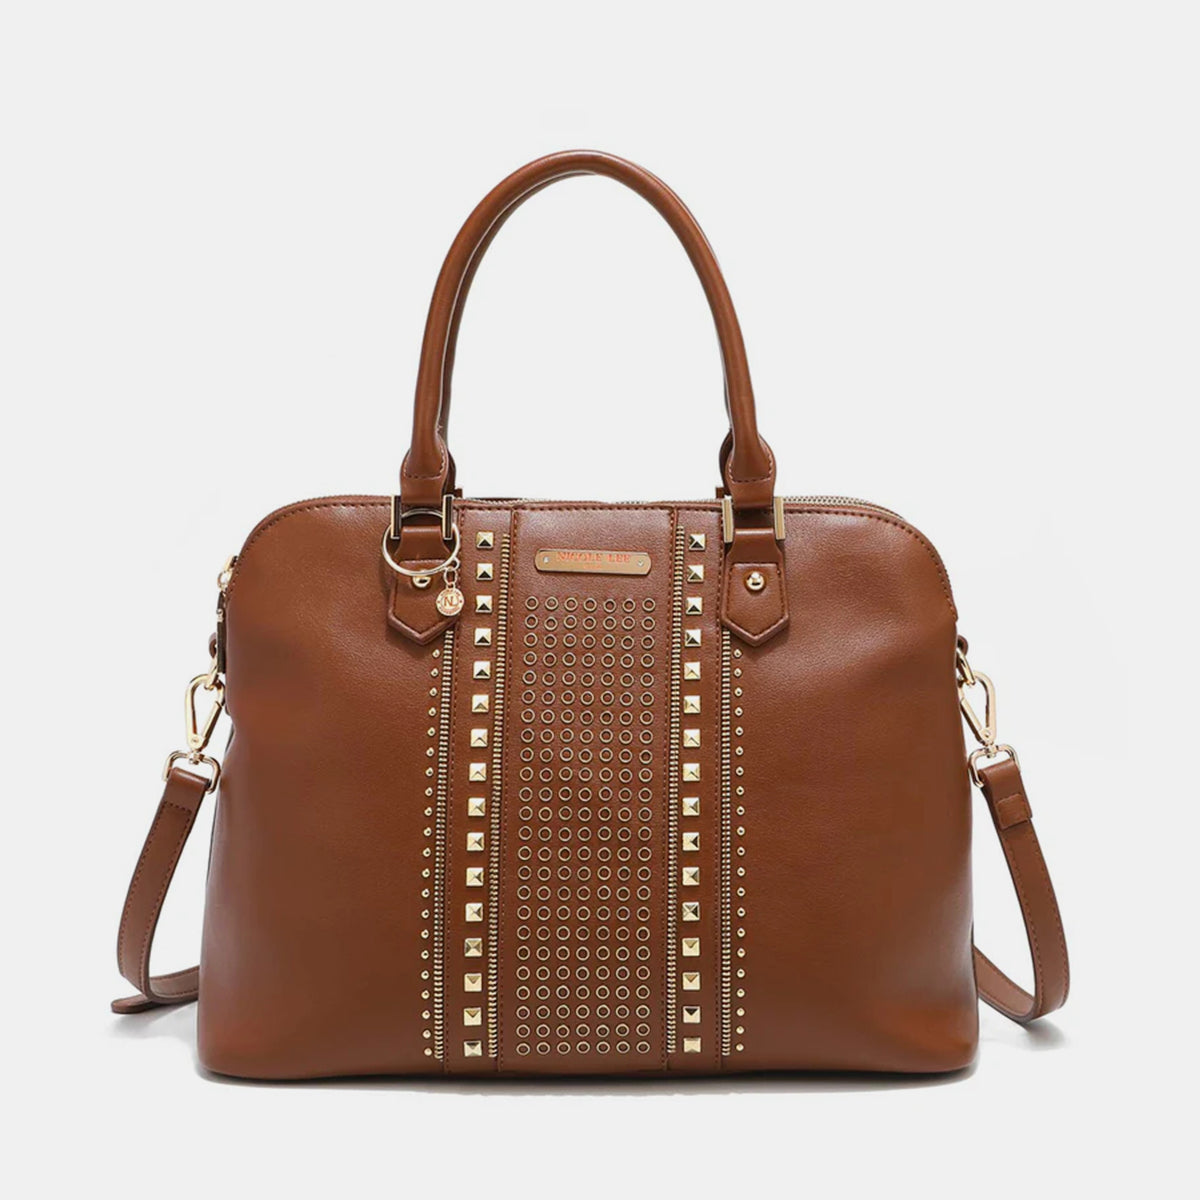 TEEK- NL Studded Decor Handbag BAG TEEK Trend   